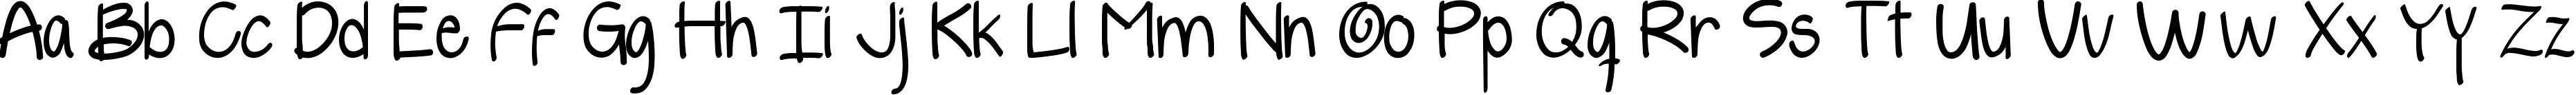 Пример написания английского алфавита шрифтом yelly